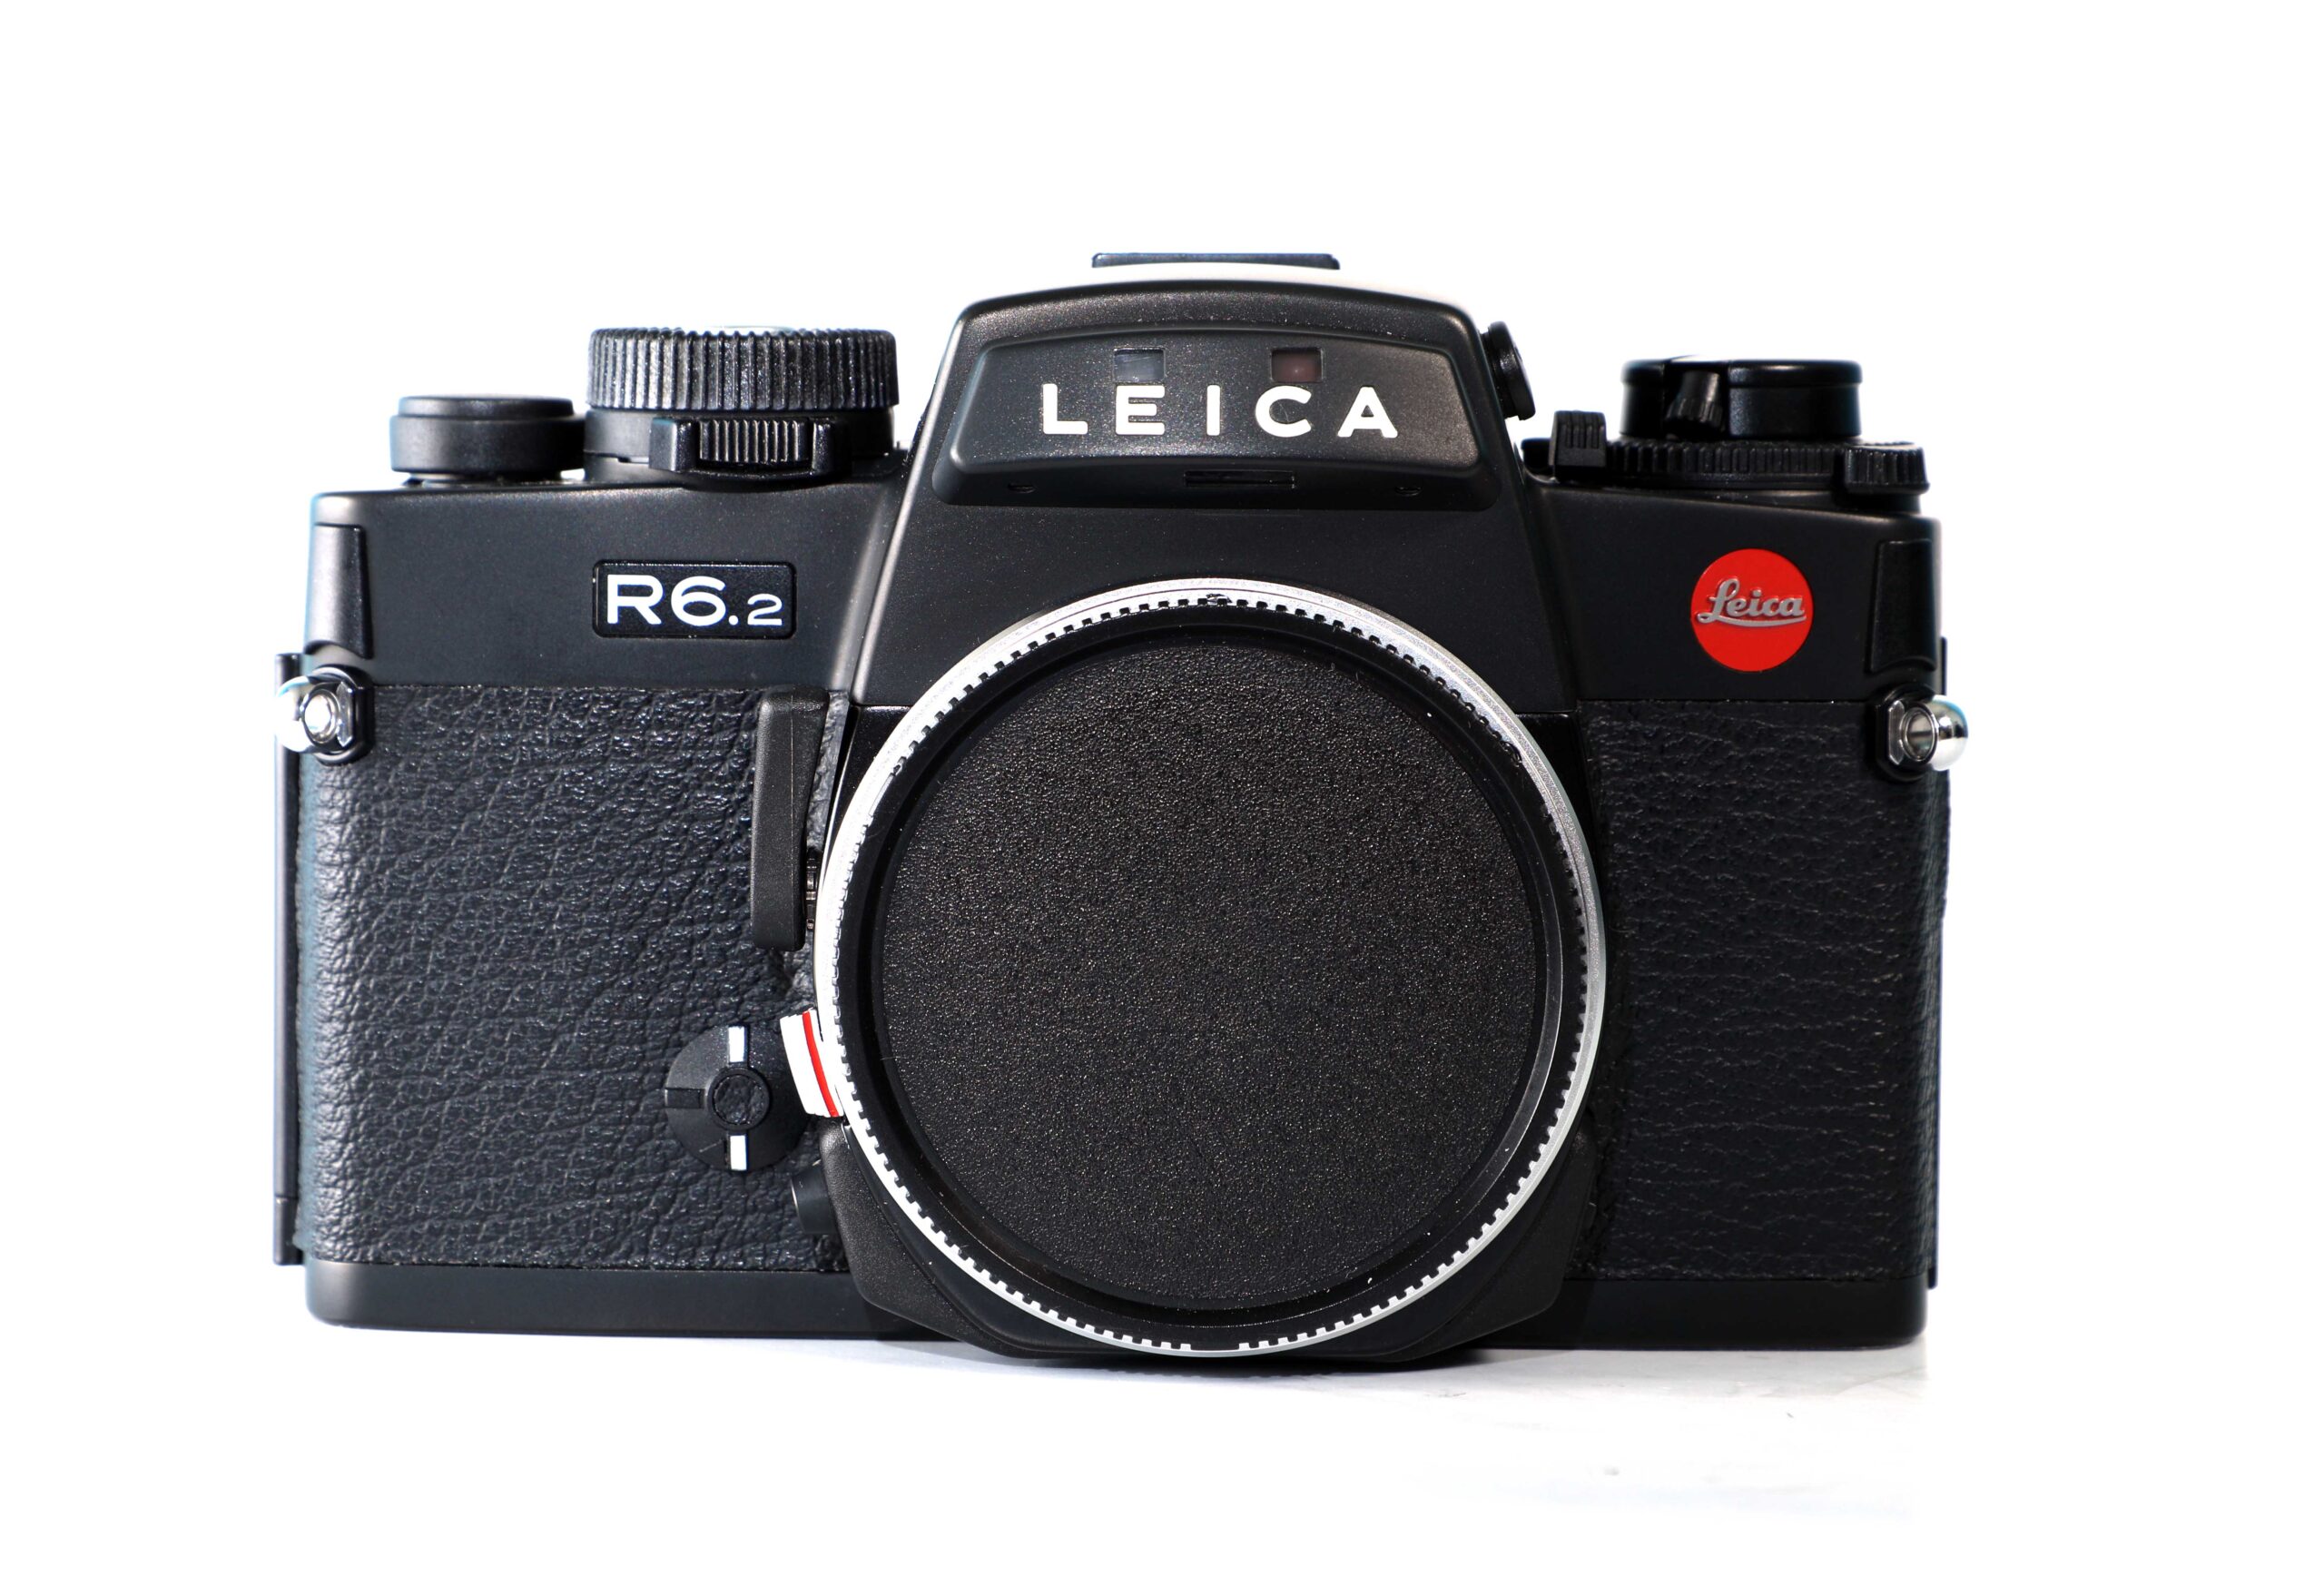 LEICA R6.2 ブラック